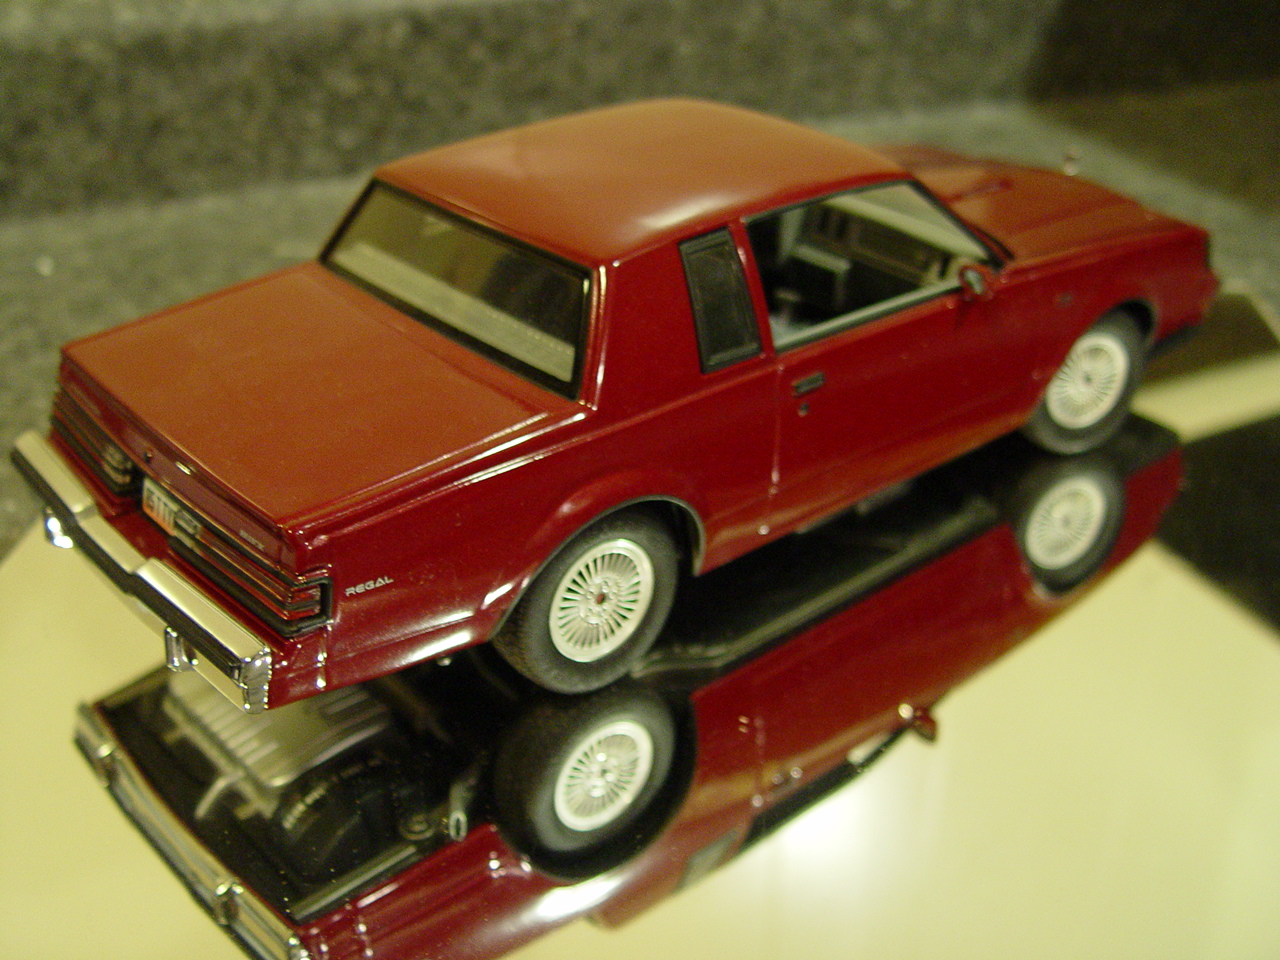 1:18 Scale GMP 8004 1985 Buick Regal T Type